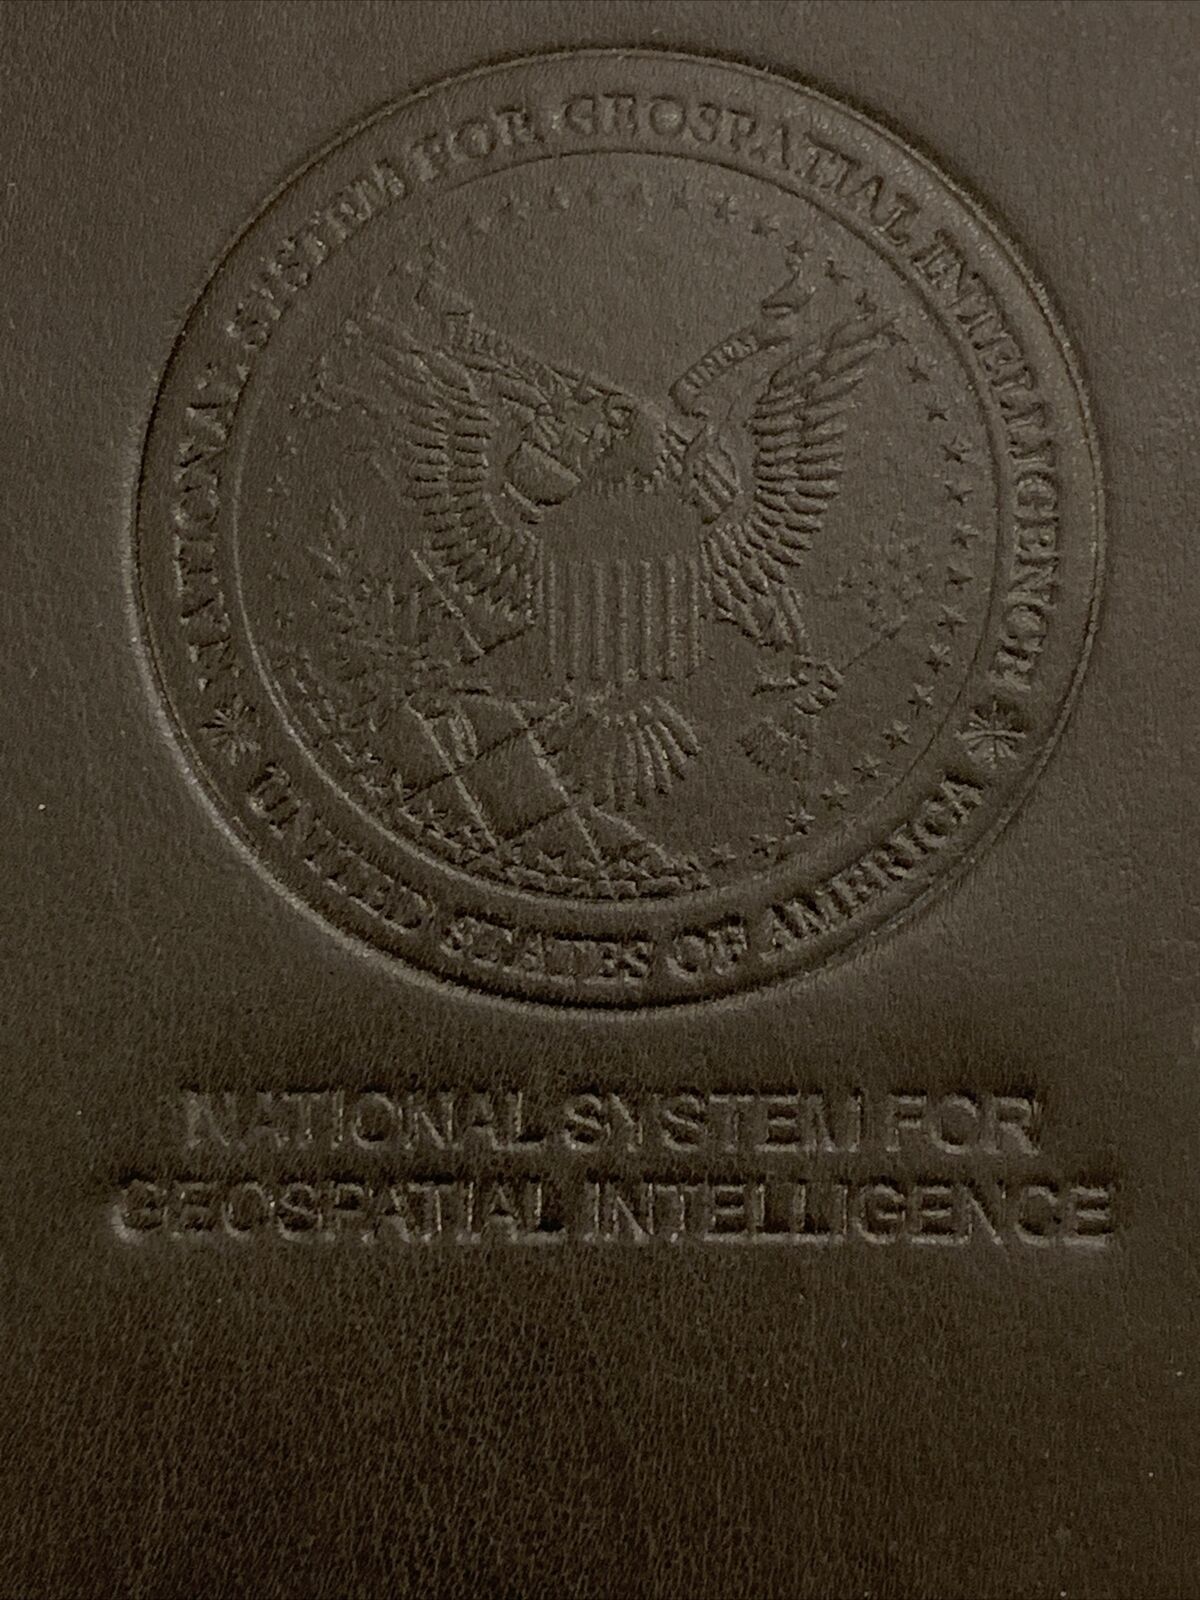 NSG Nat'l System Geospatial Intelligence PORTFOLIO Organizer w/ notepad 